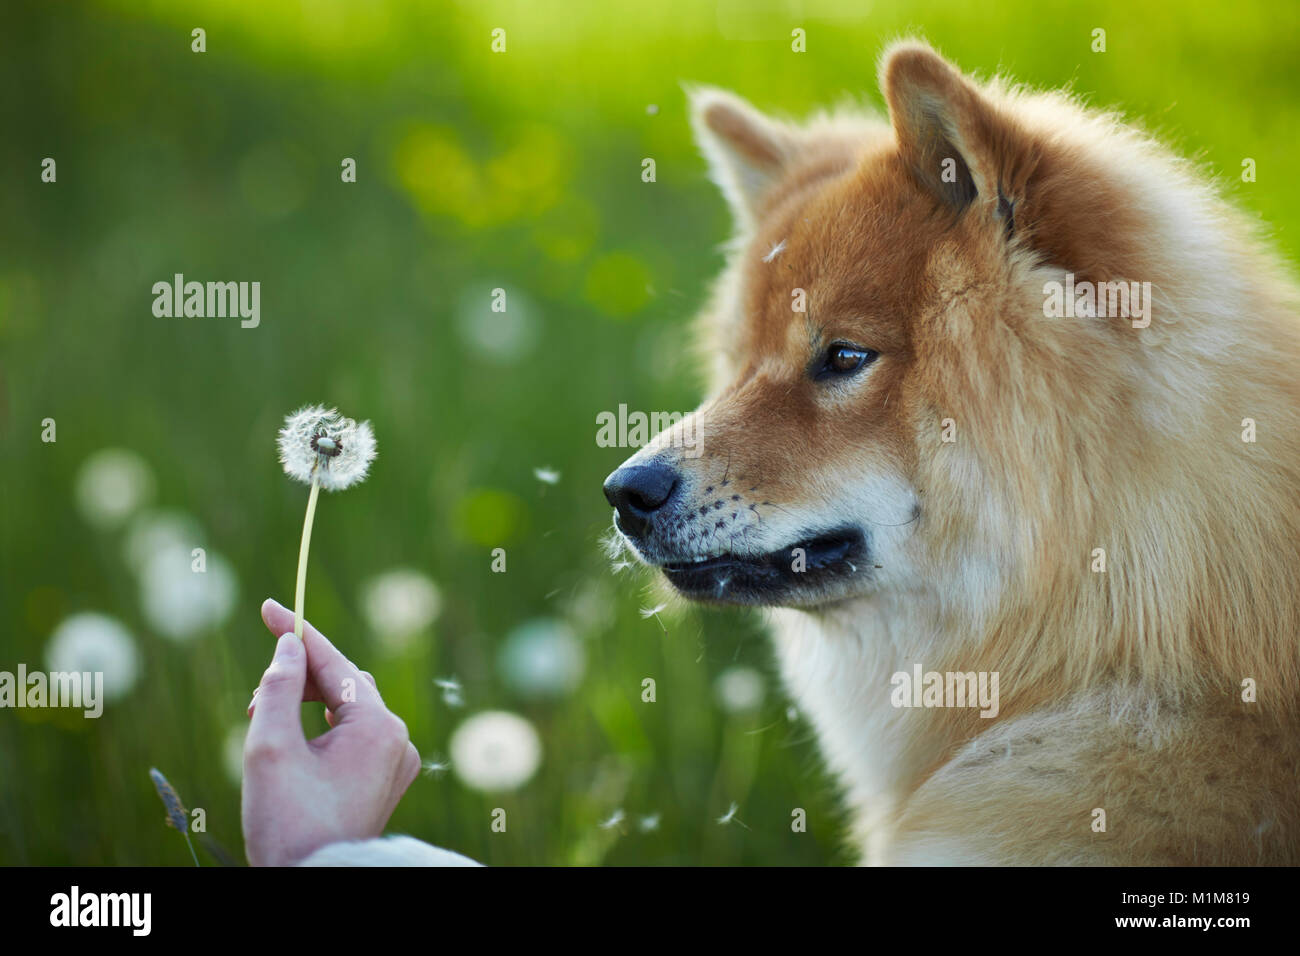 Eurasier, euroasiático. Perro adulto viendo blowball, celebrada con la mano. Alemania Foto de stock